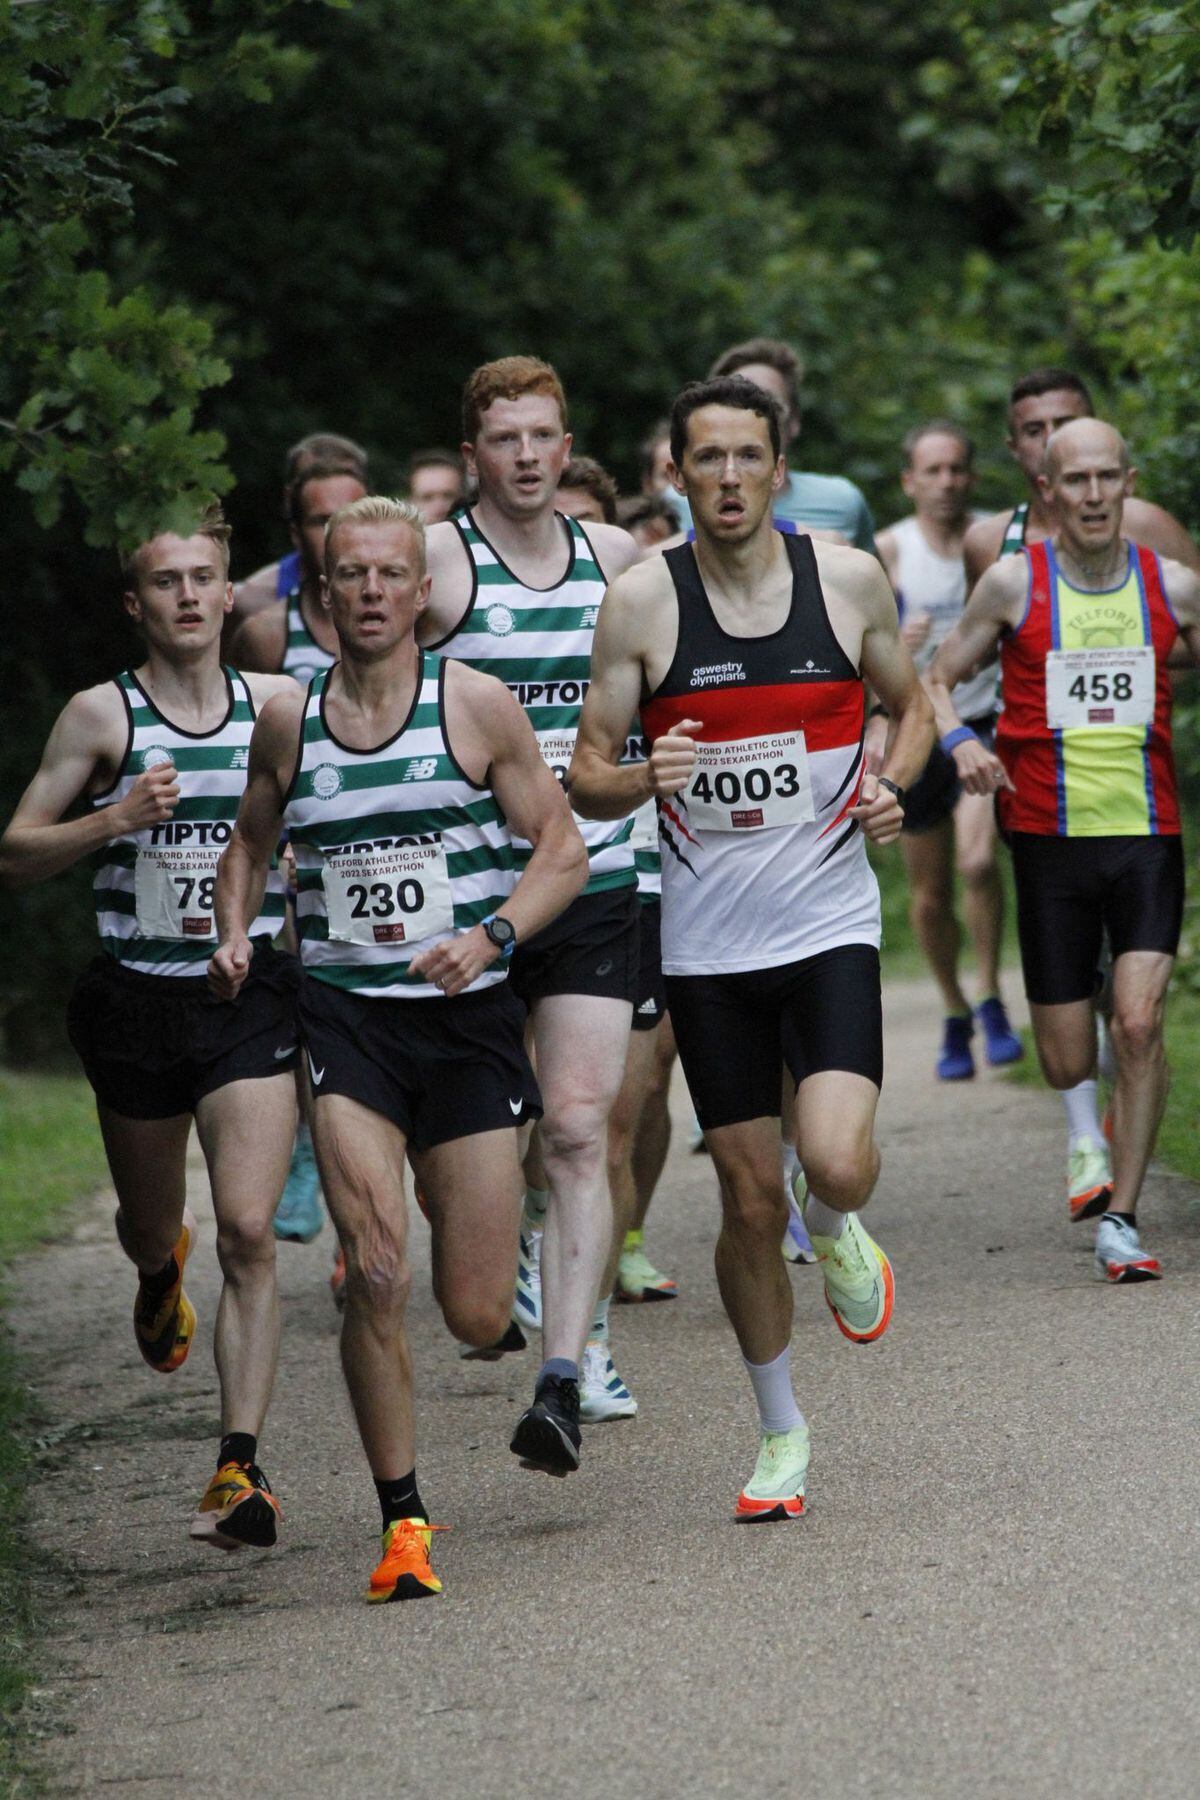 Almost 400 runners took part in the Vic Musgrove five-kilometre rac